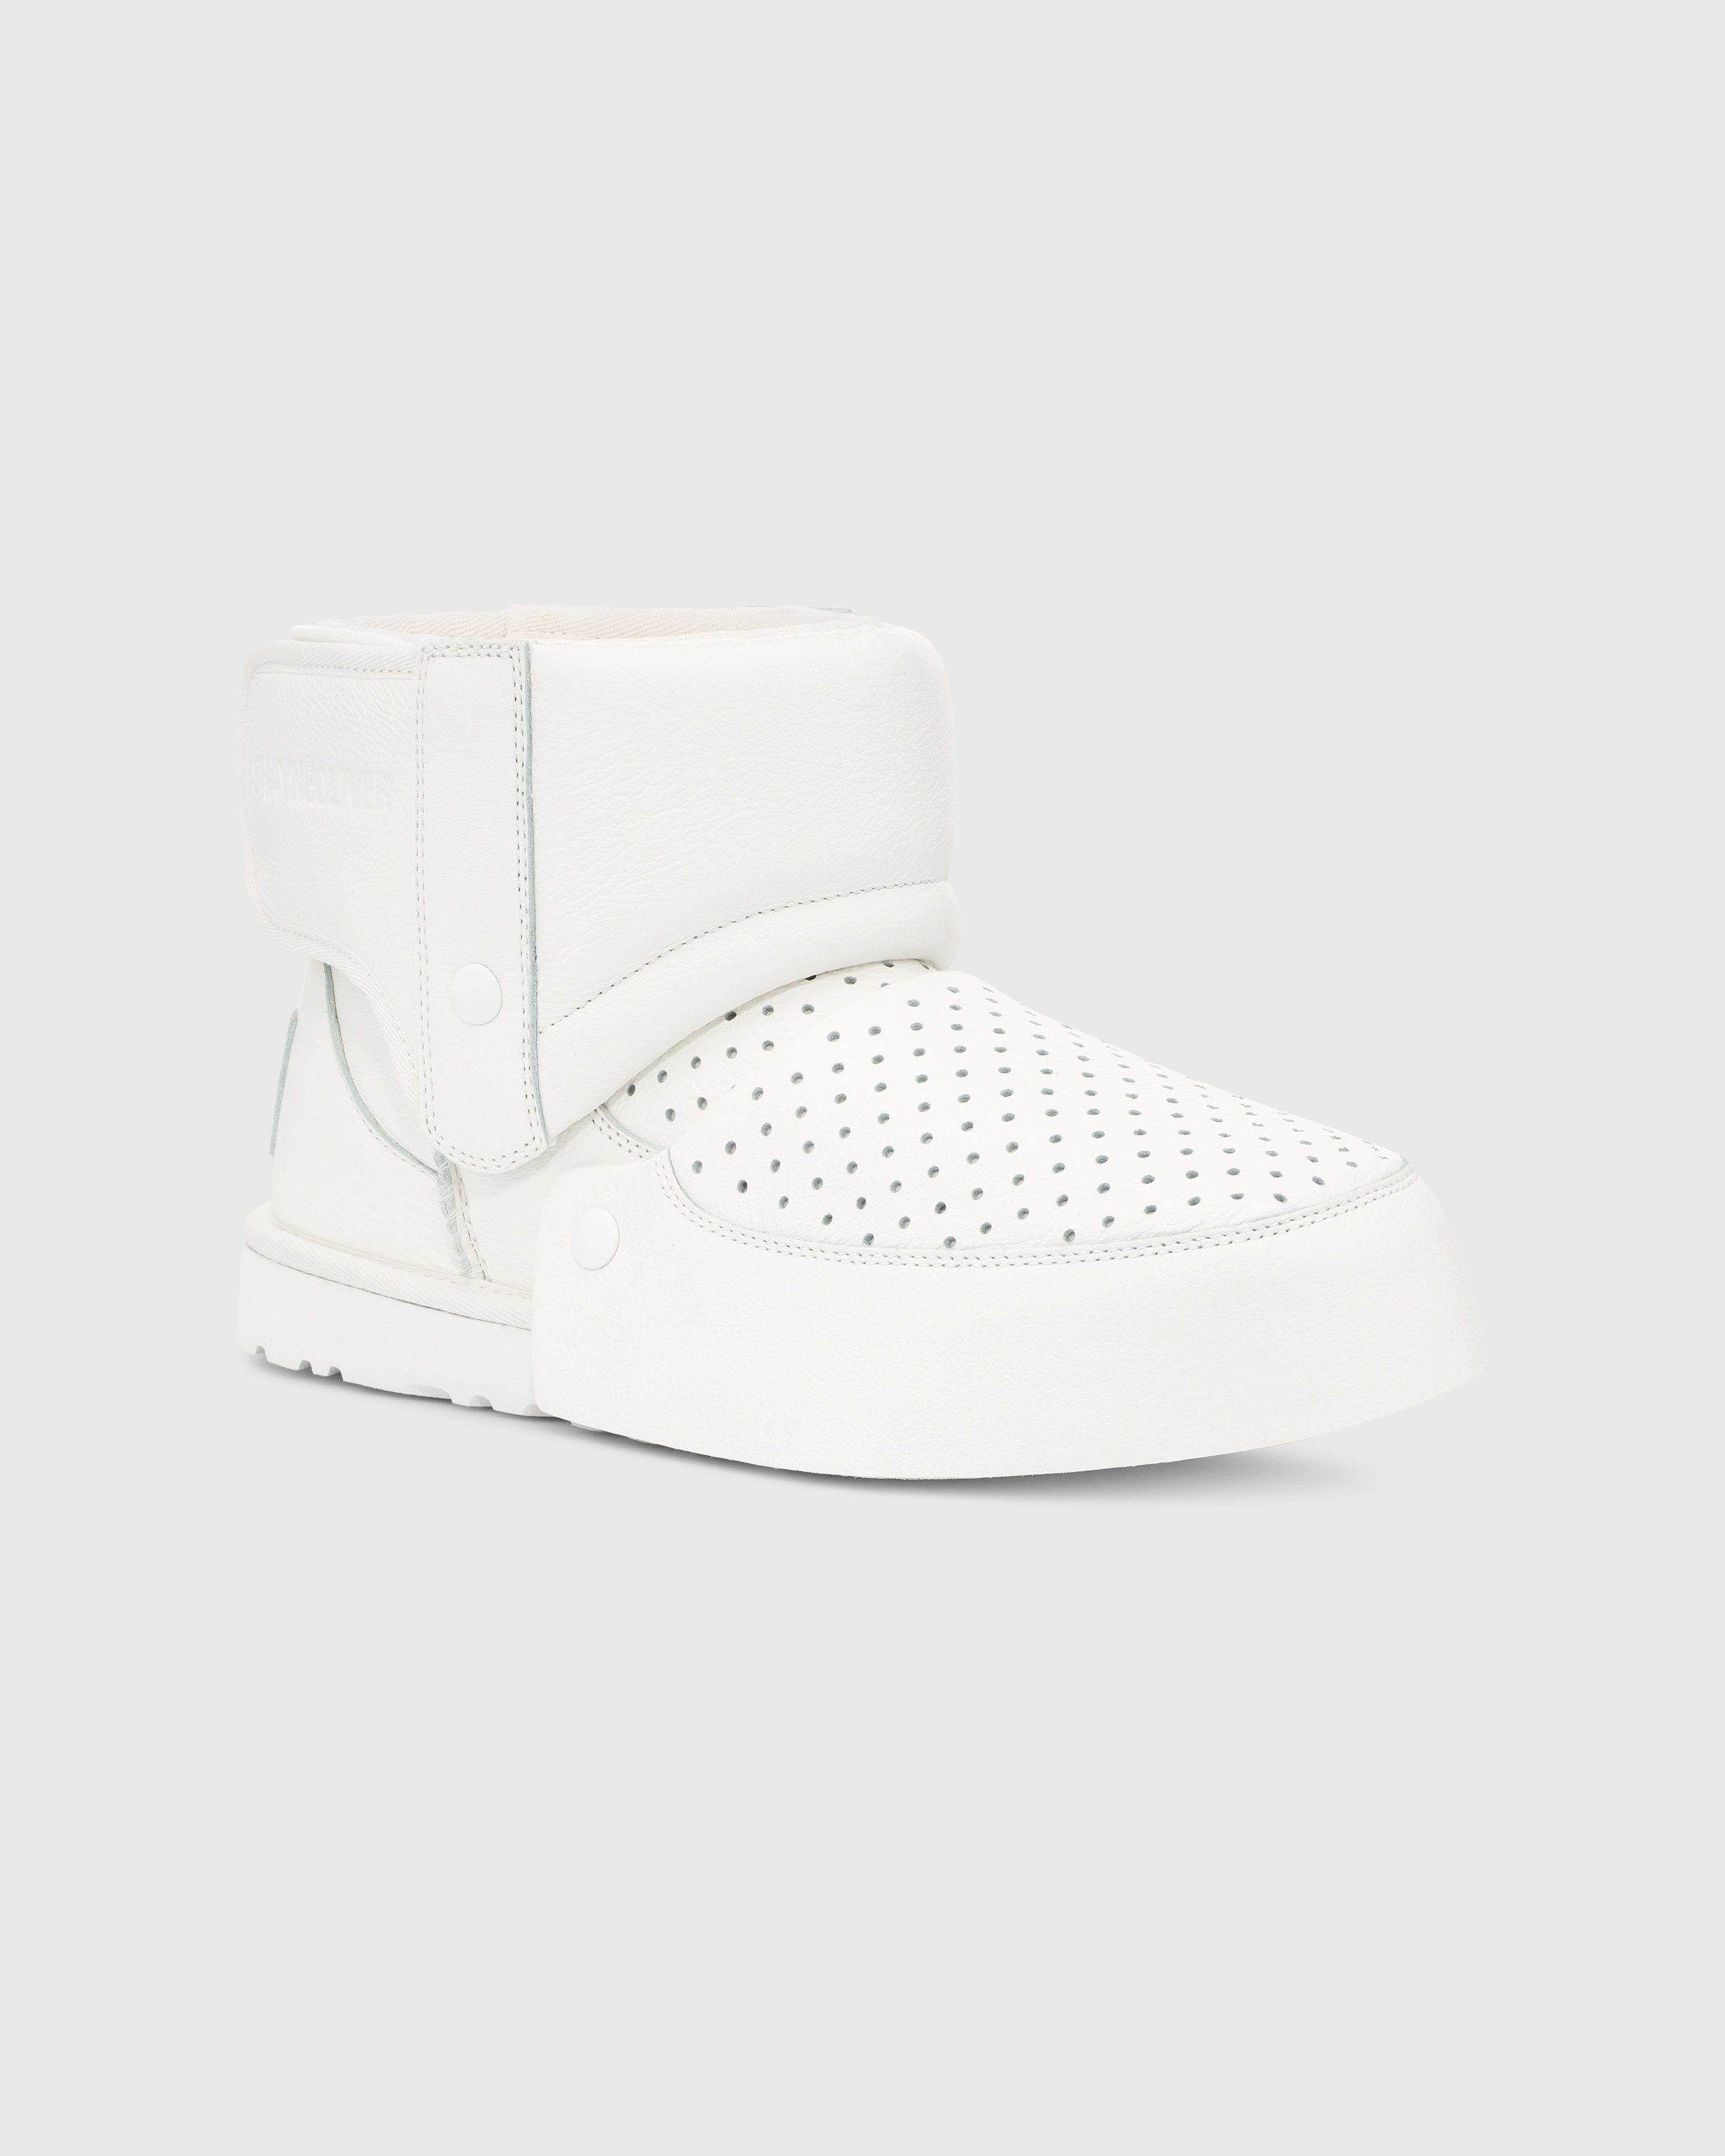 Ugg x Shayne Oliver – Mini Boot White - Lined Boots - White - Image 5